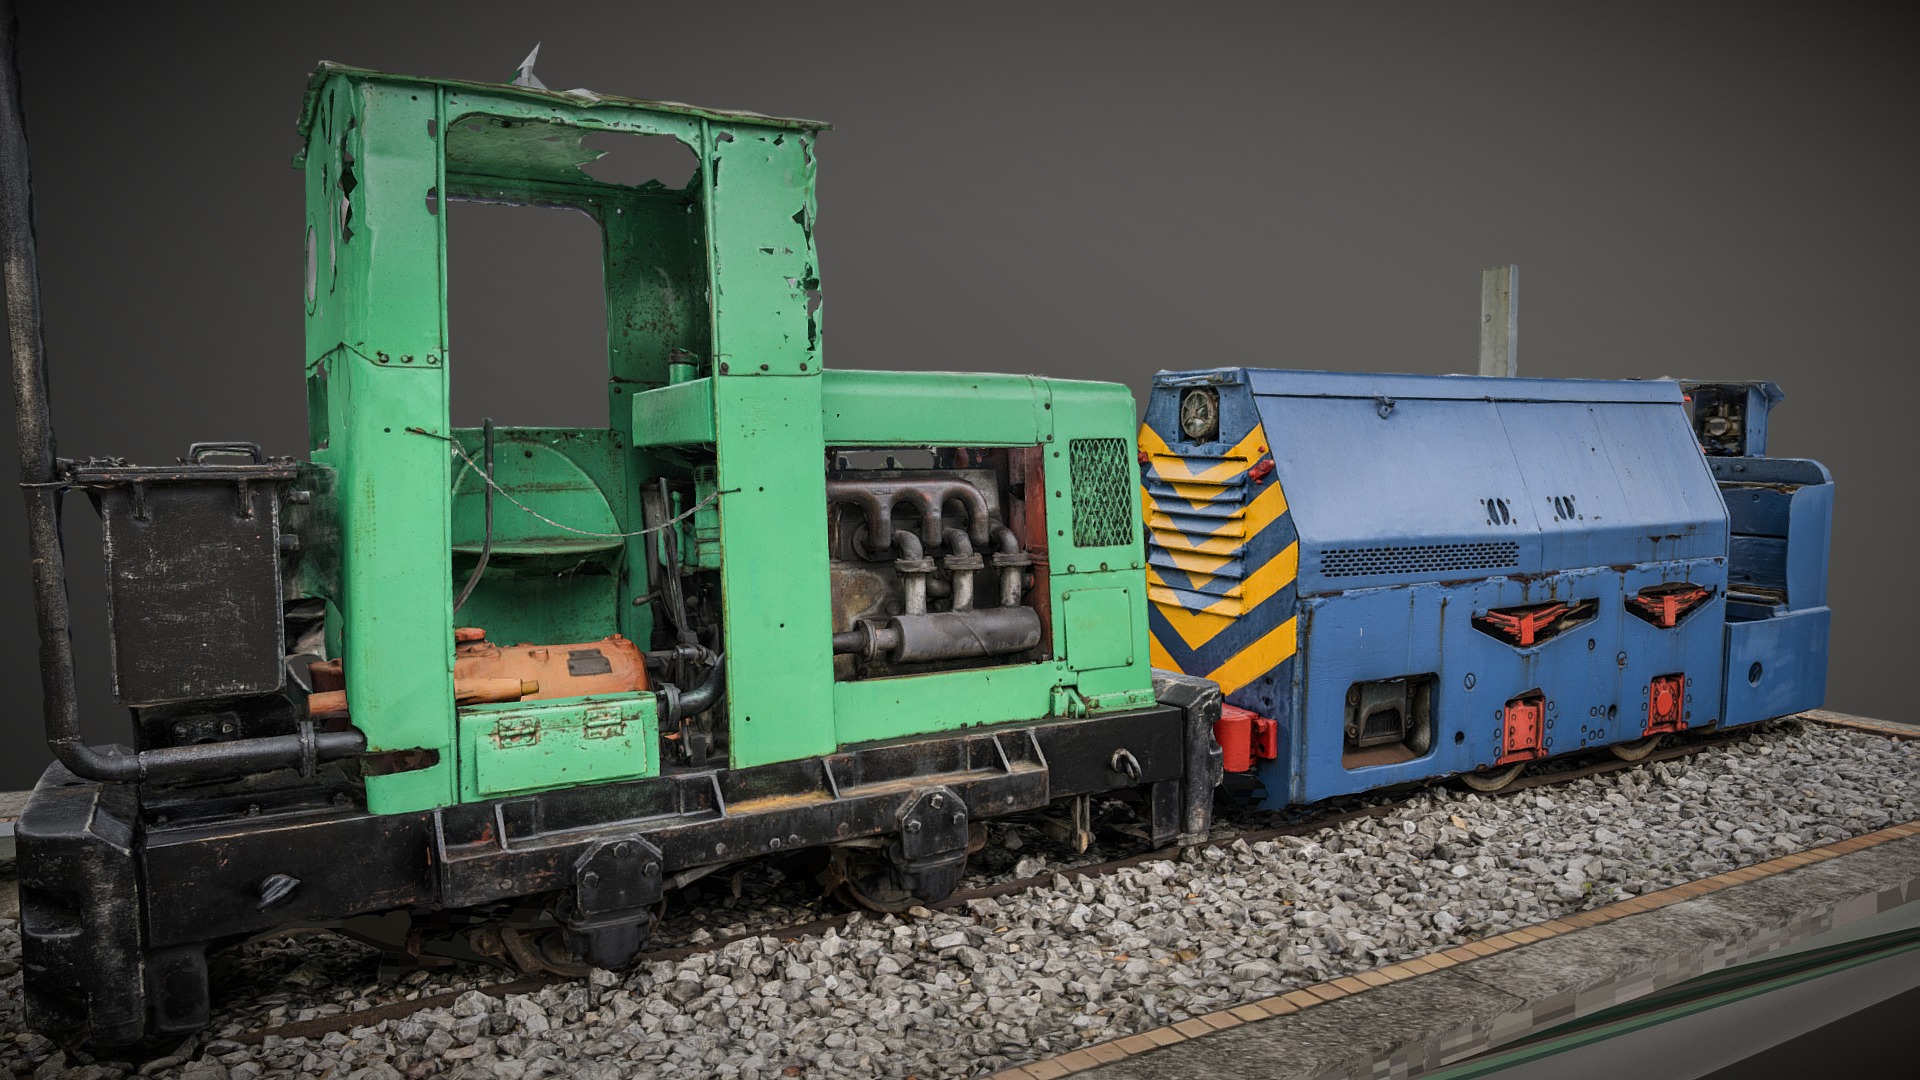 3D model Locomotive La Camocha raw photogrammetry scan - This is a 3D model of the Locomotive La Camocha raw photogrammetry scan. The 3D model is about a green and blue train engine.